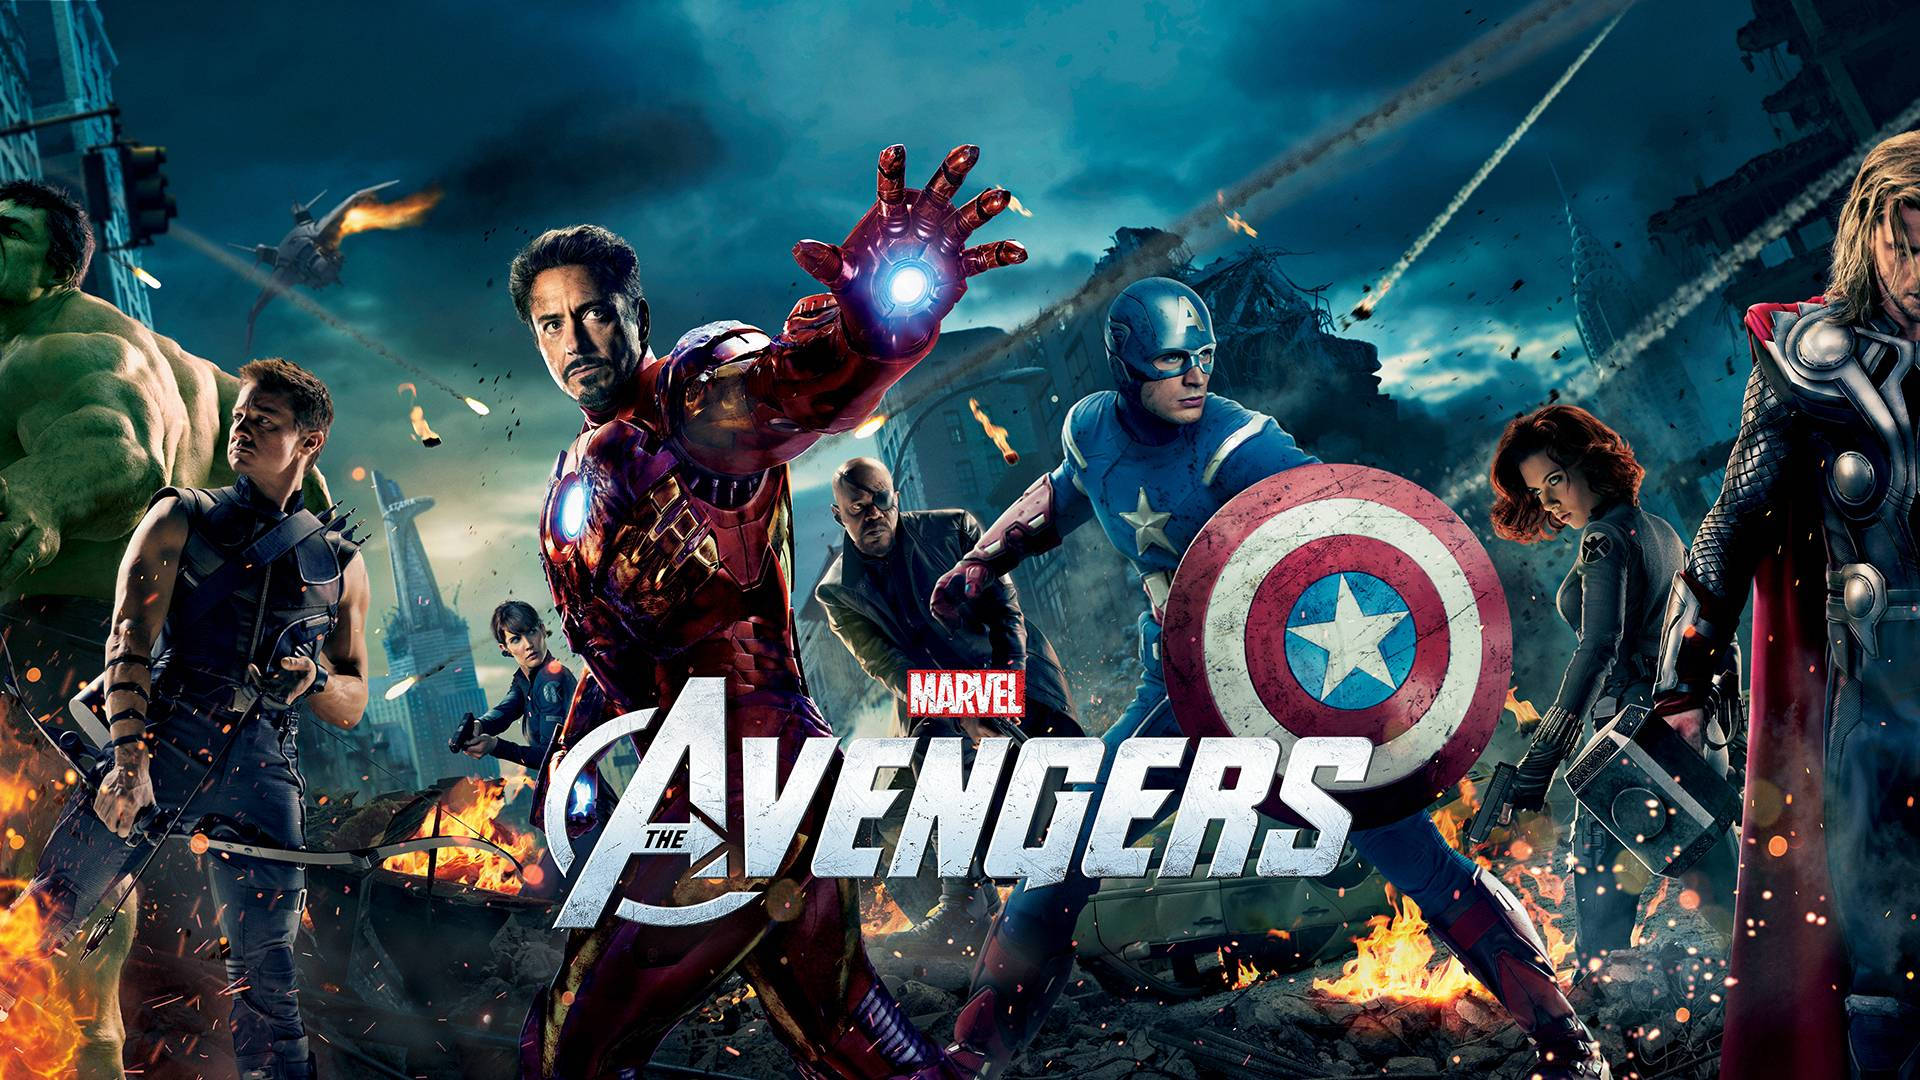 Dieoriginal-superhelden - Die Avengers Wallpaper